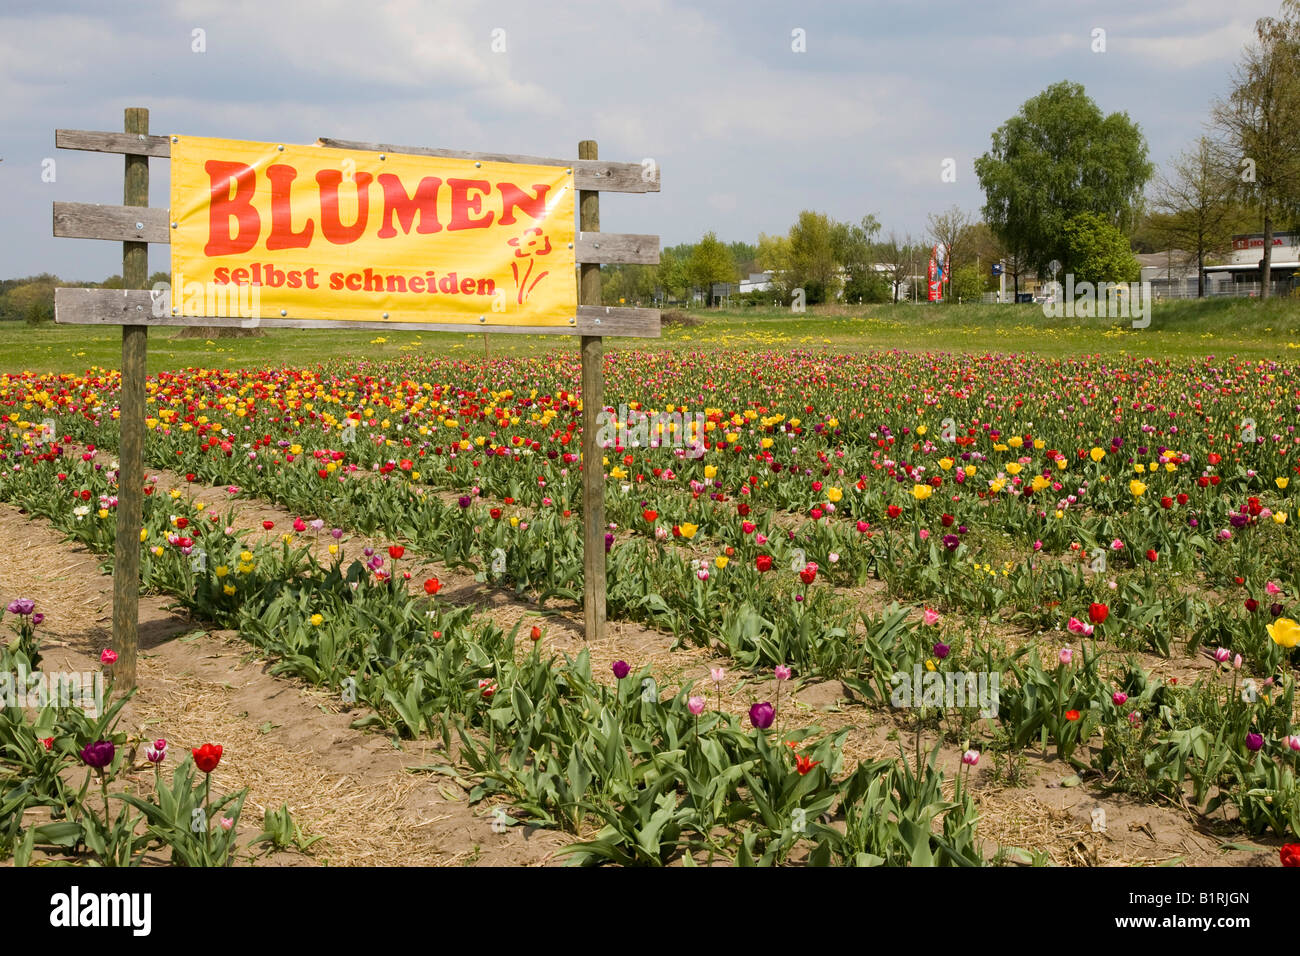 Cartel Blumen selbst schneiden, recoger flores usted mismo, campos de tulipanes, Bergstrasse recorrido de montaña, Hesse, Alemania, Europa Foto de stock